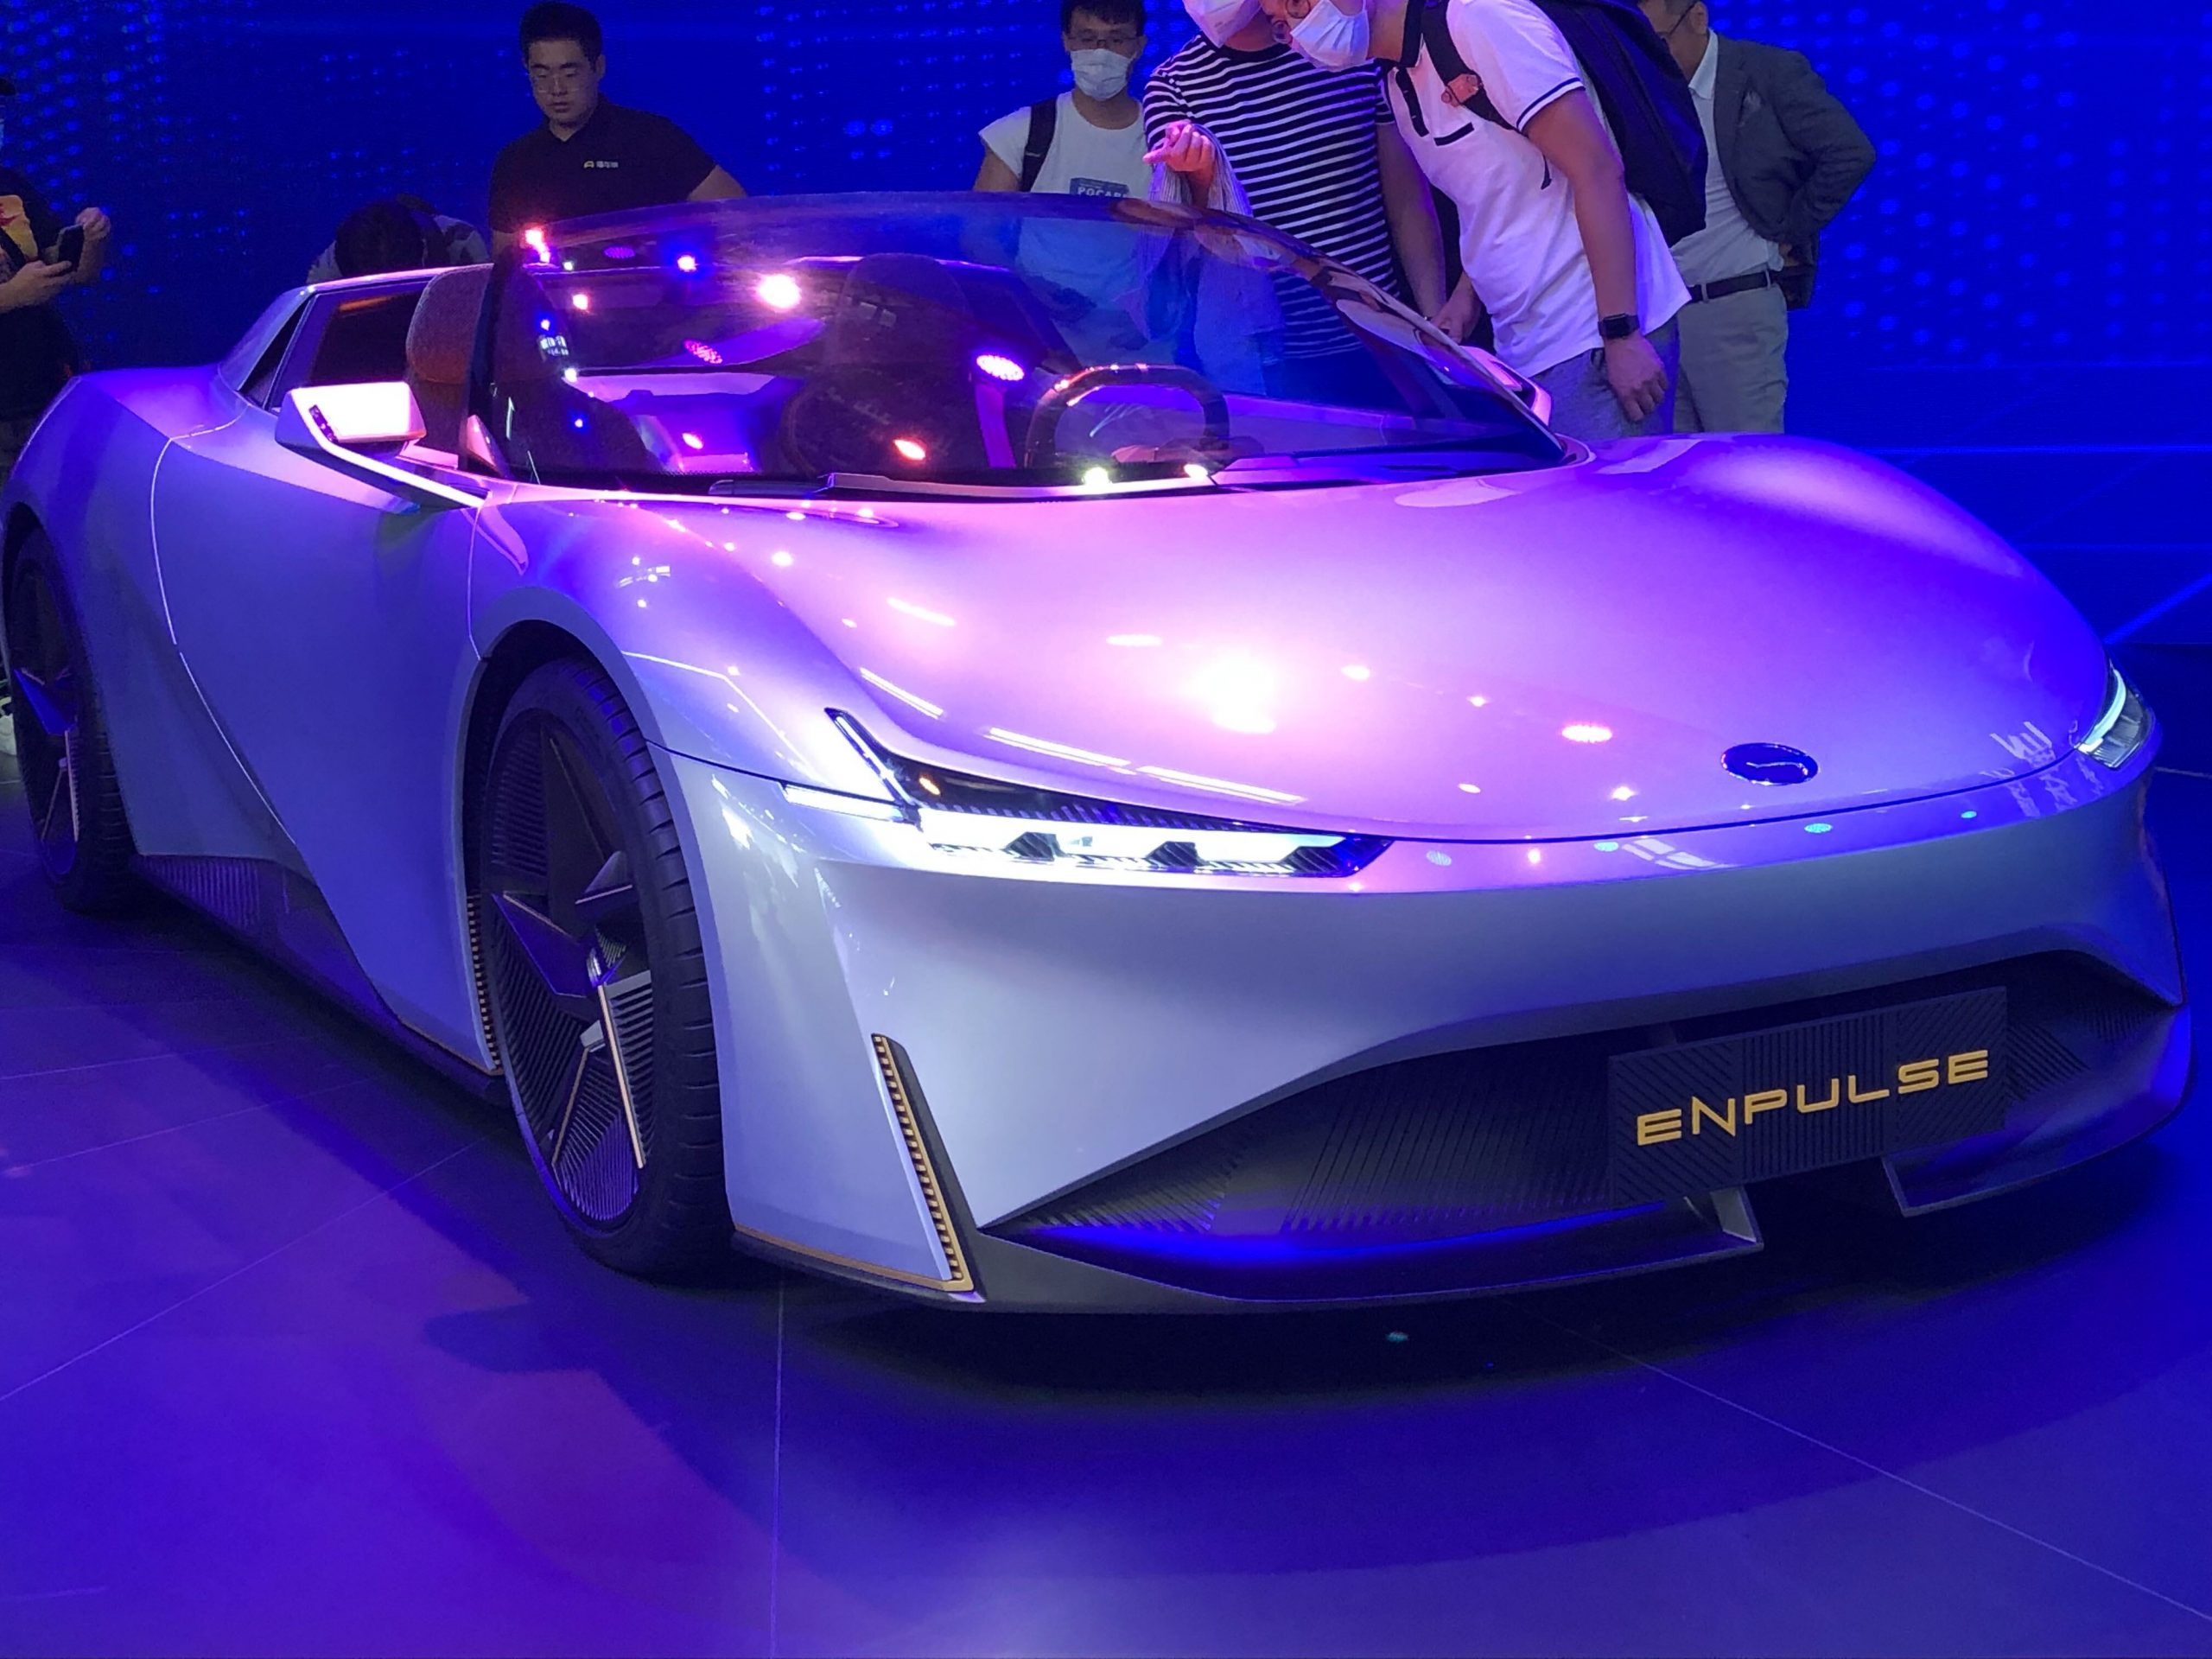 Chinese language automakers exhibit idea sportscars, amid auto market hunch